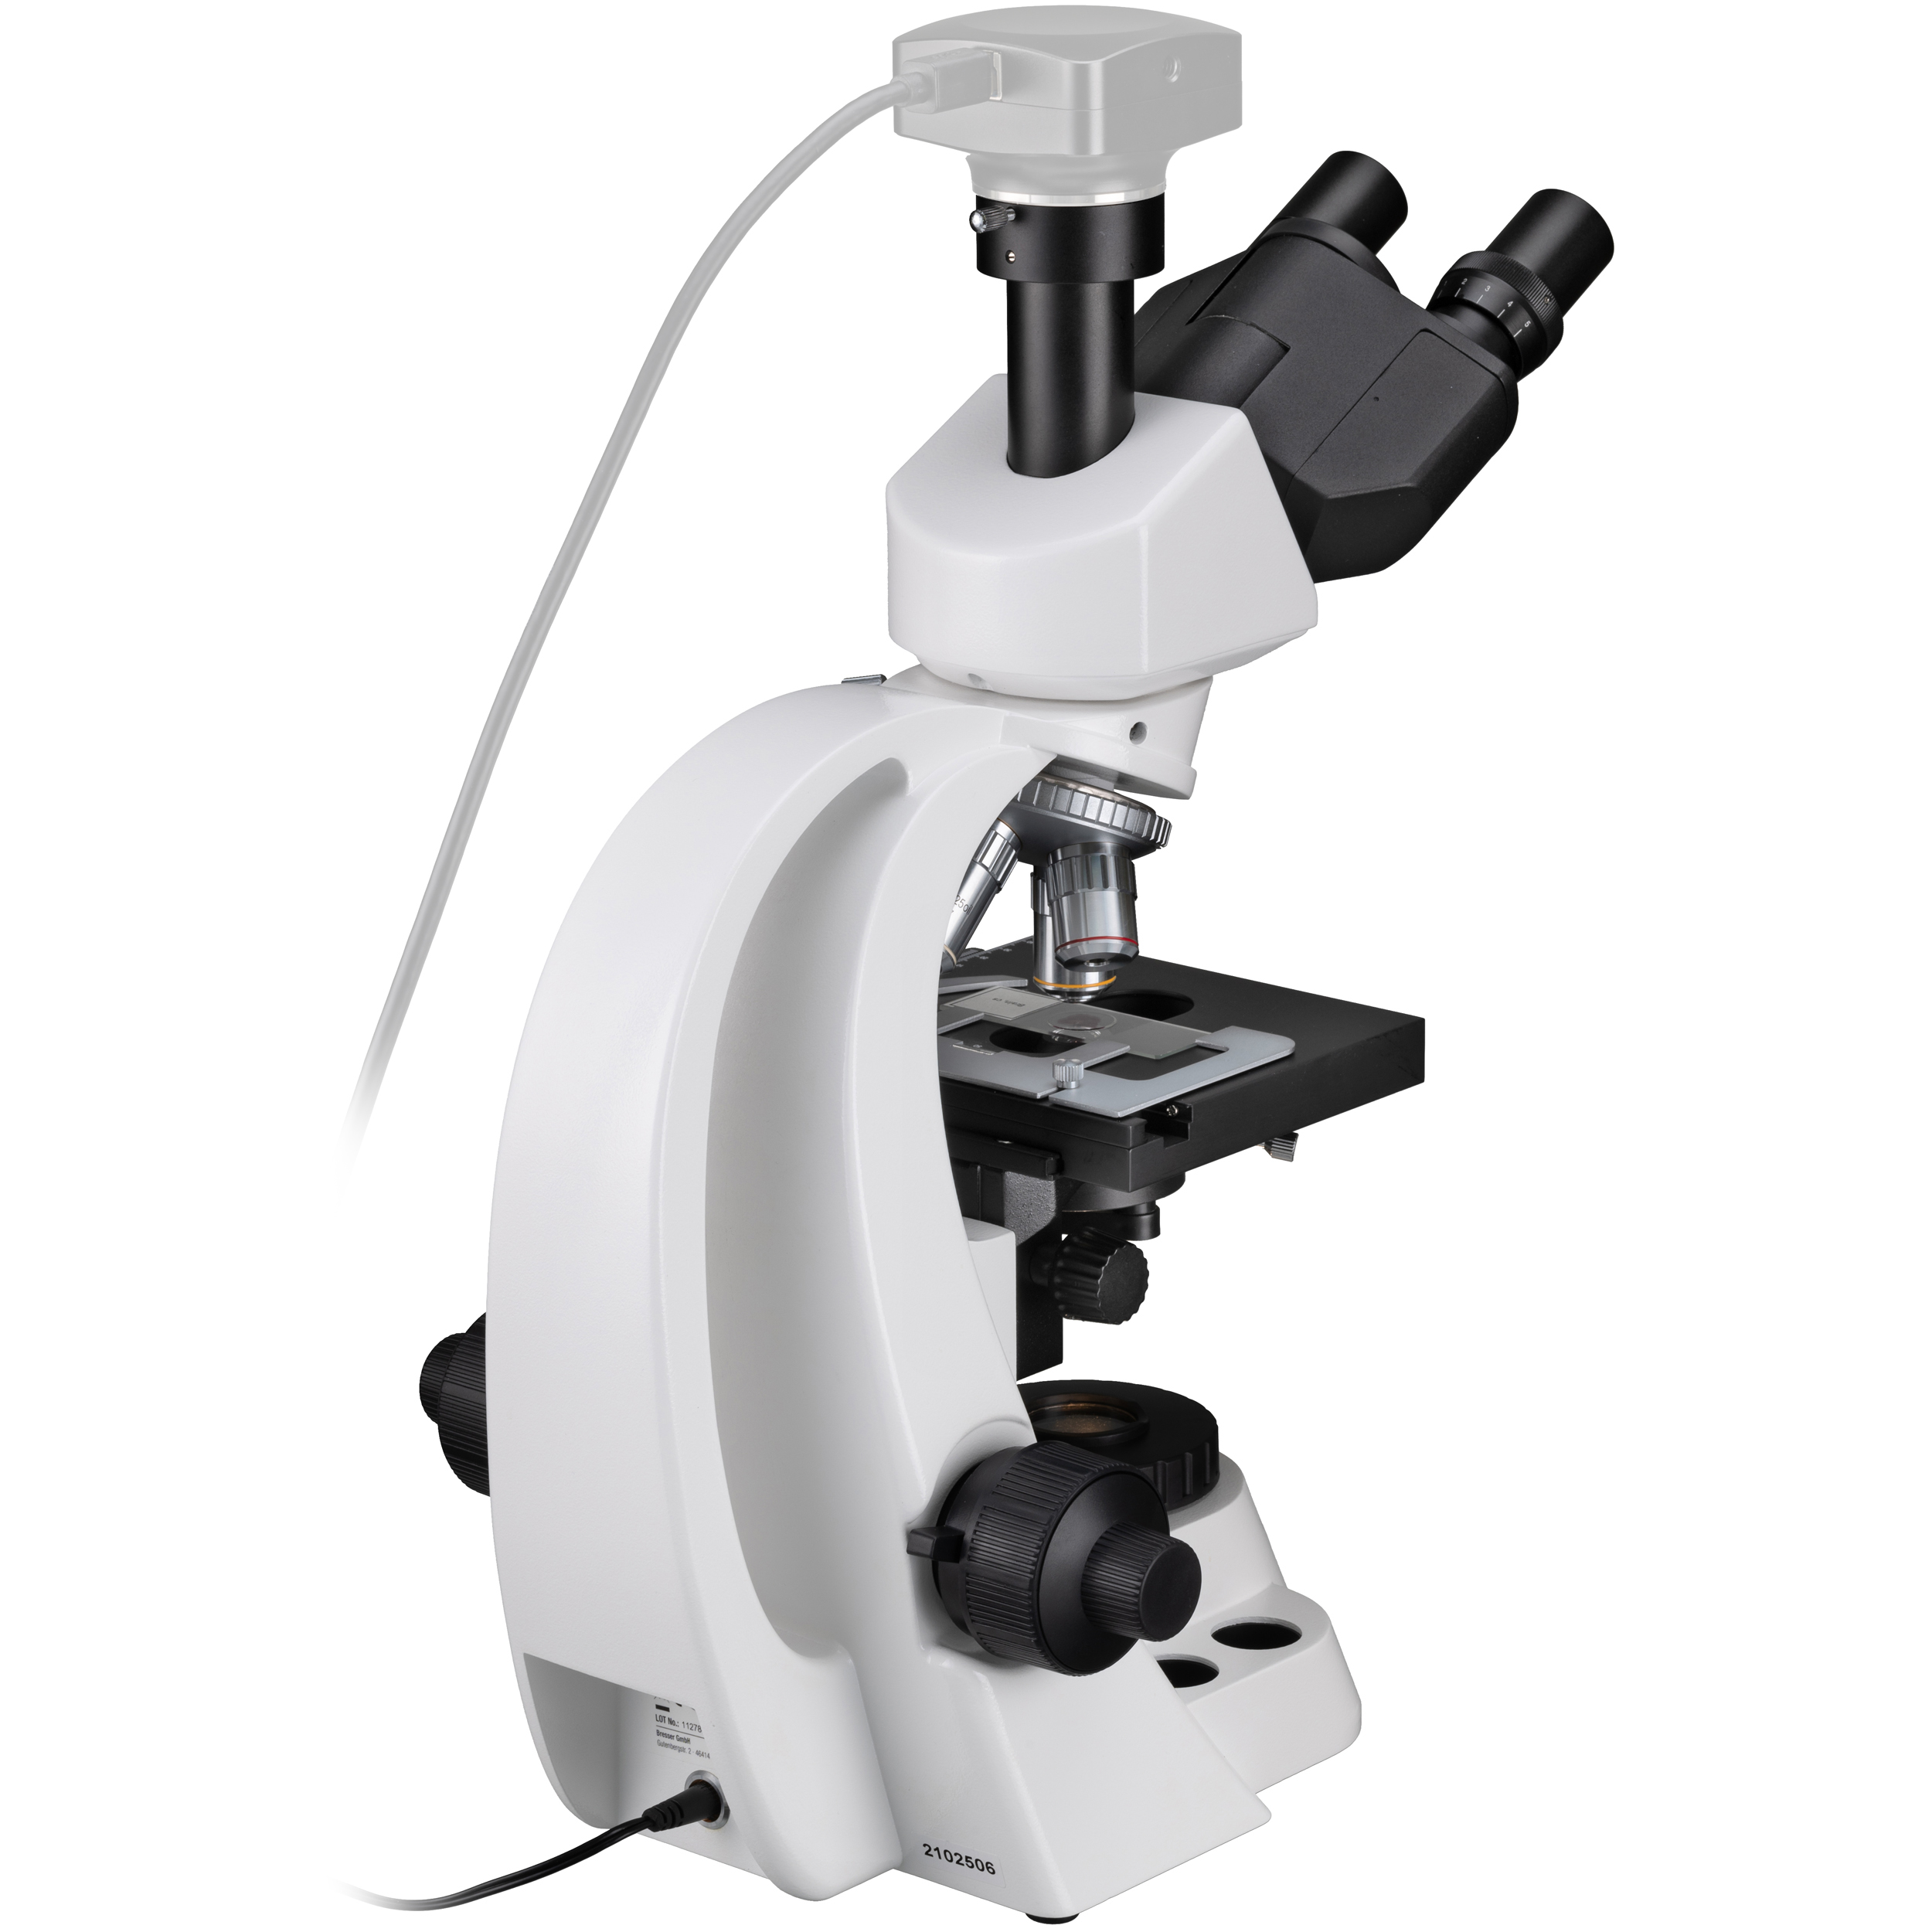 BRESSER Bioscience 40-1000x Trinocular Microscopio